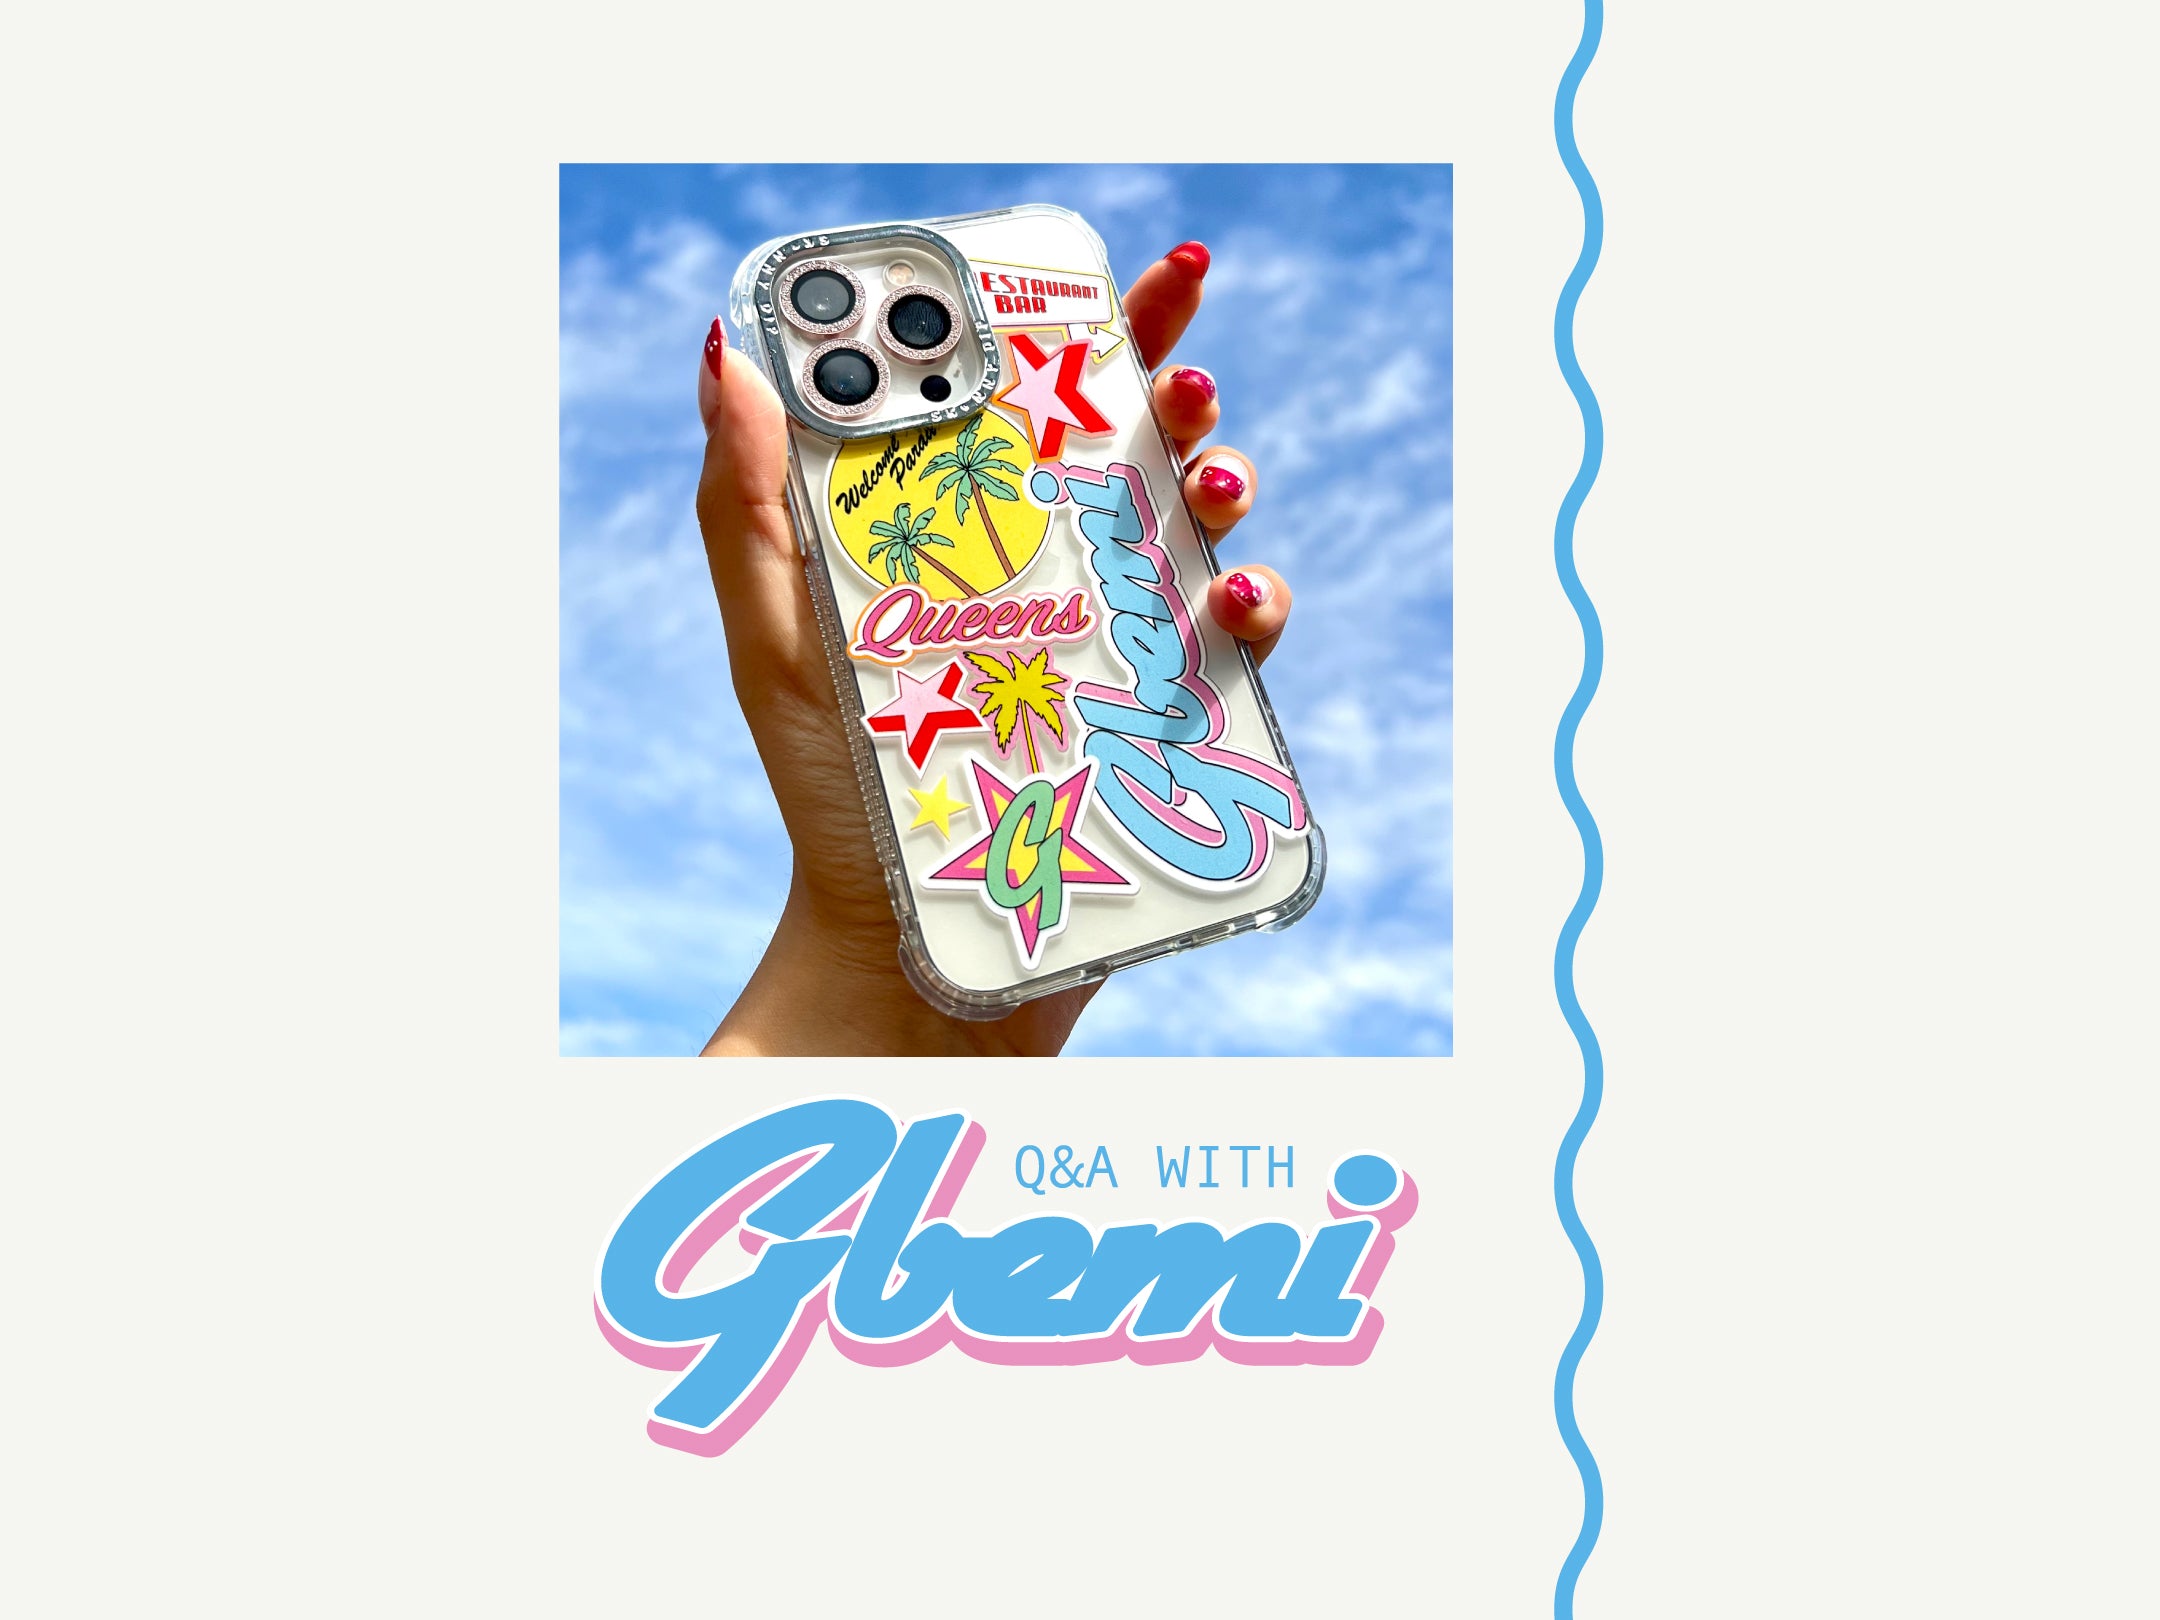 Gbemi Girls x Skinnydip: Q&A with Alice & Toni